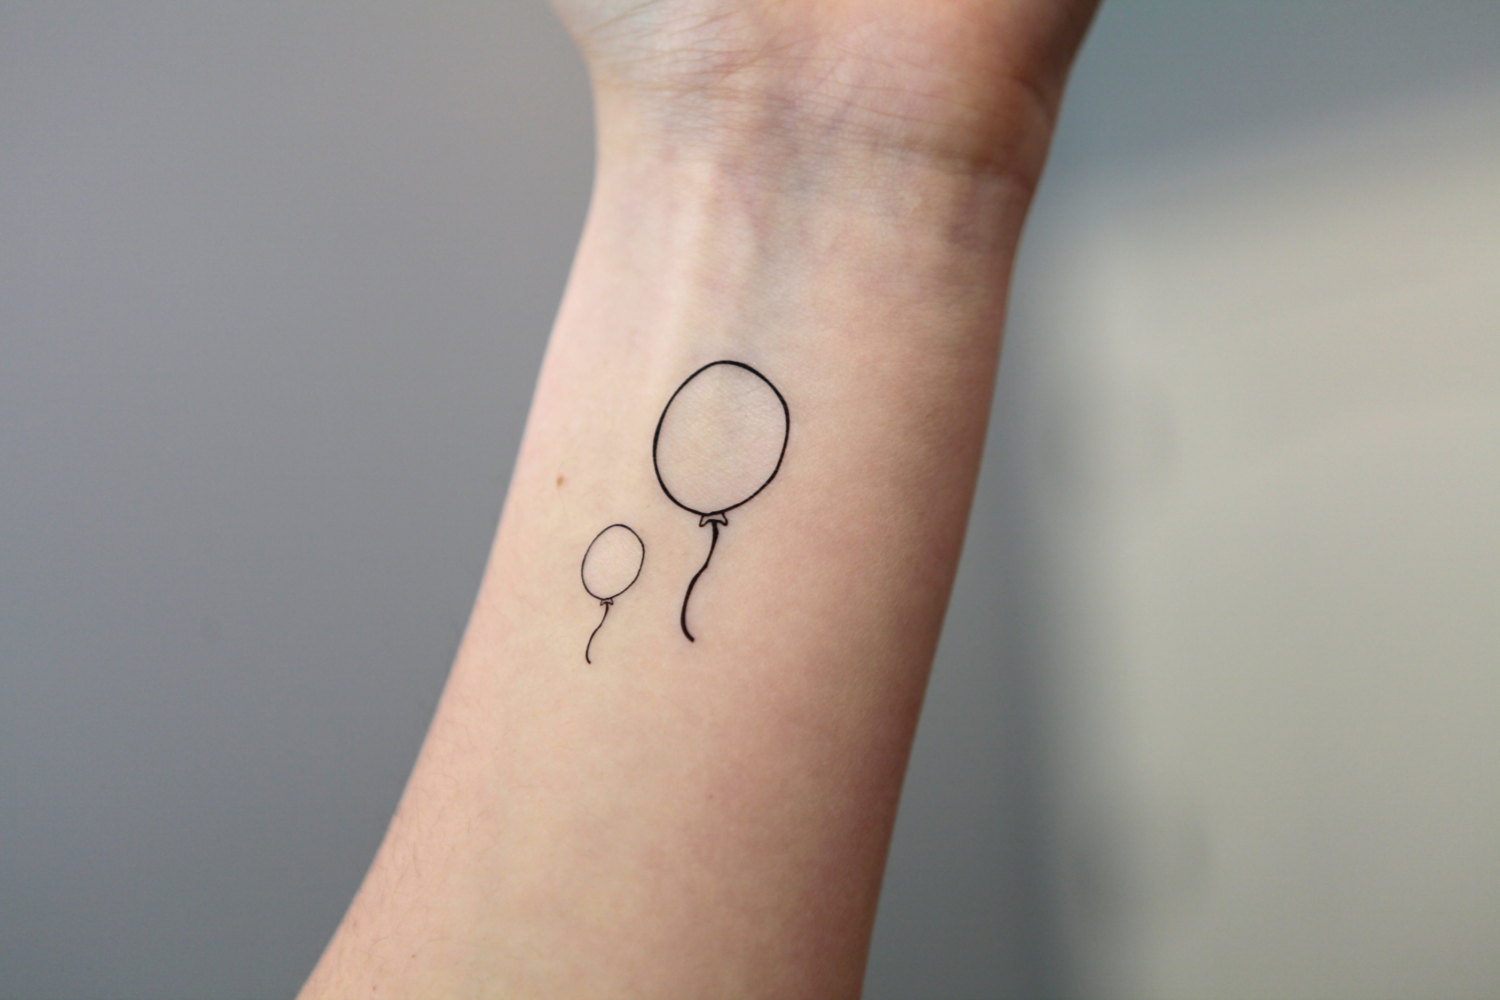 Black Outline Two Balloon Tattoo On Wrist